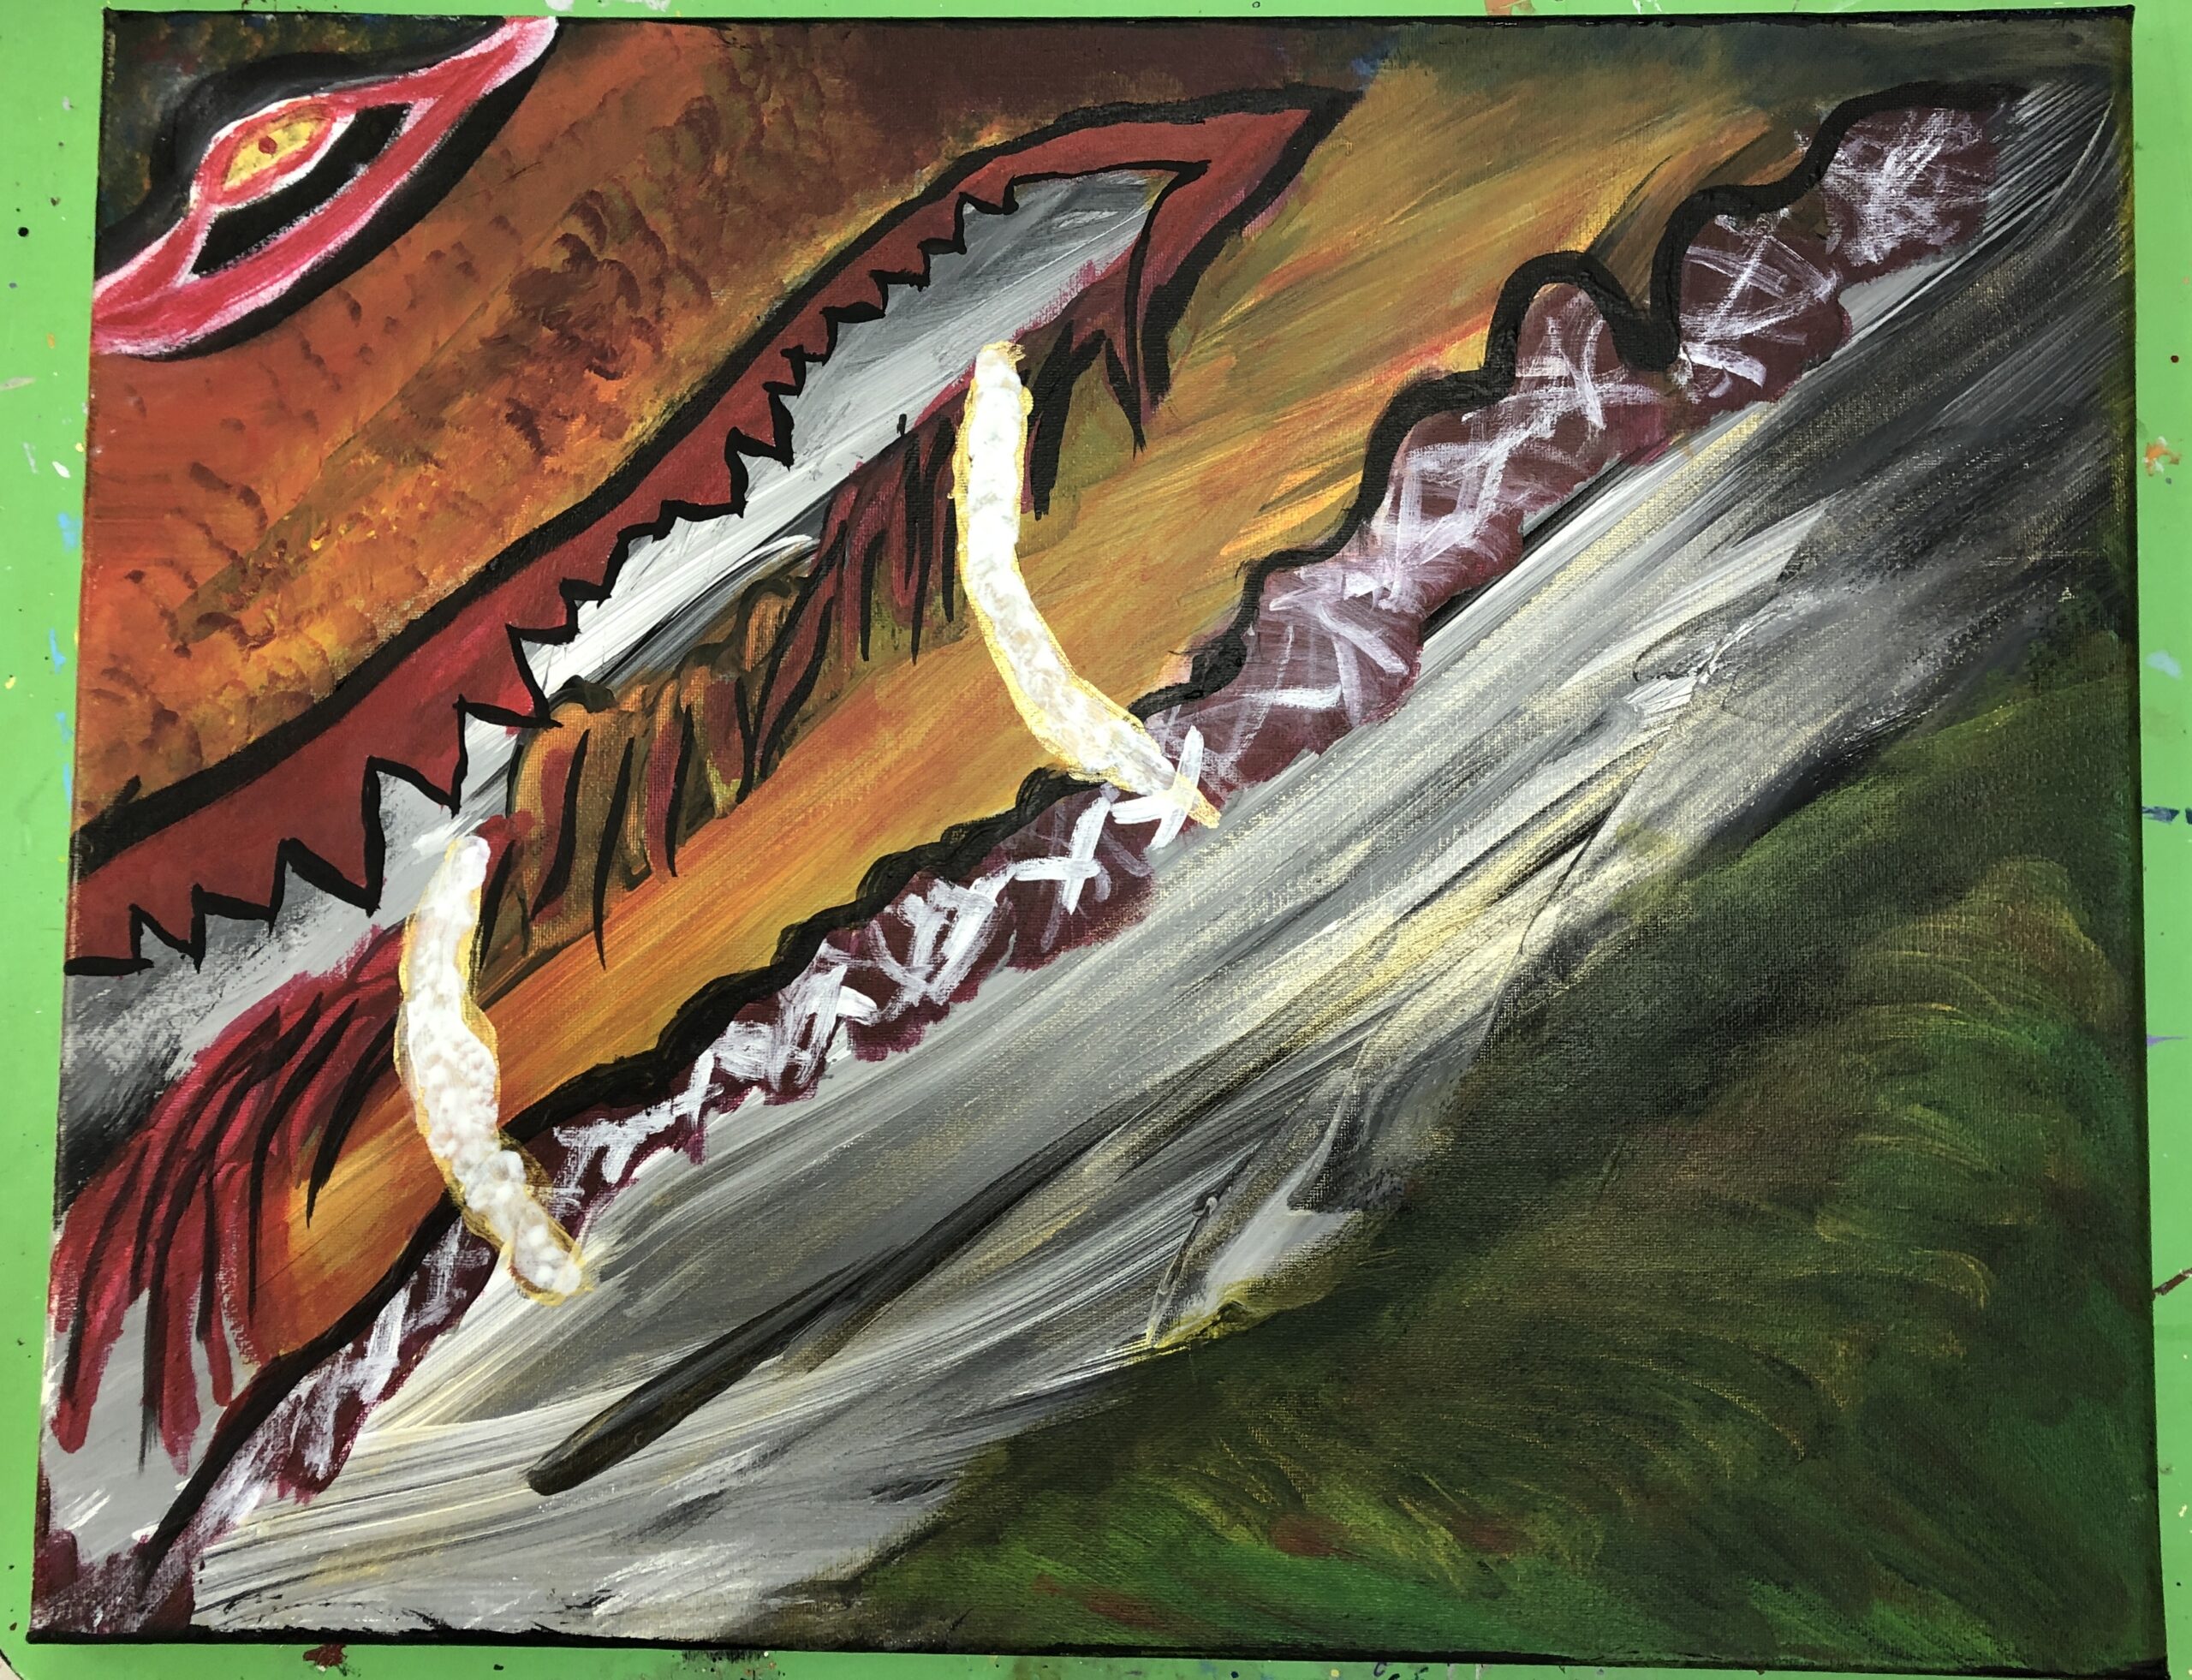 artist interpretation of a dragon head flying over a valley.